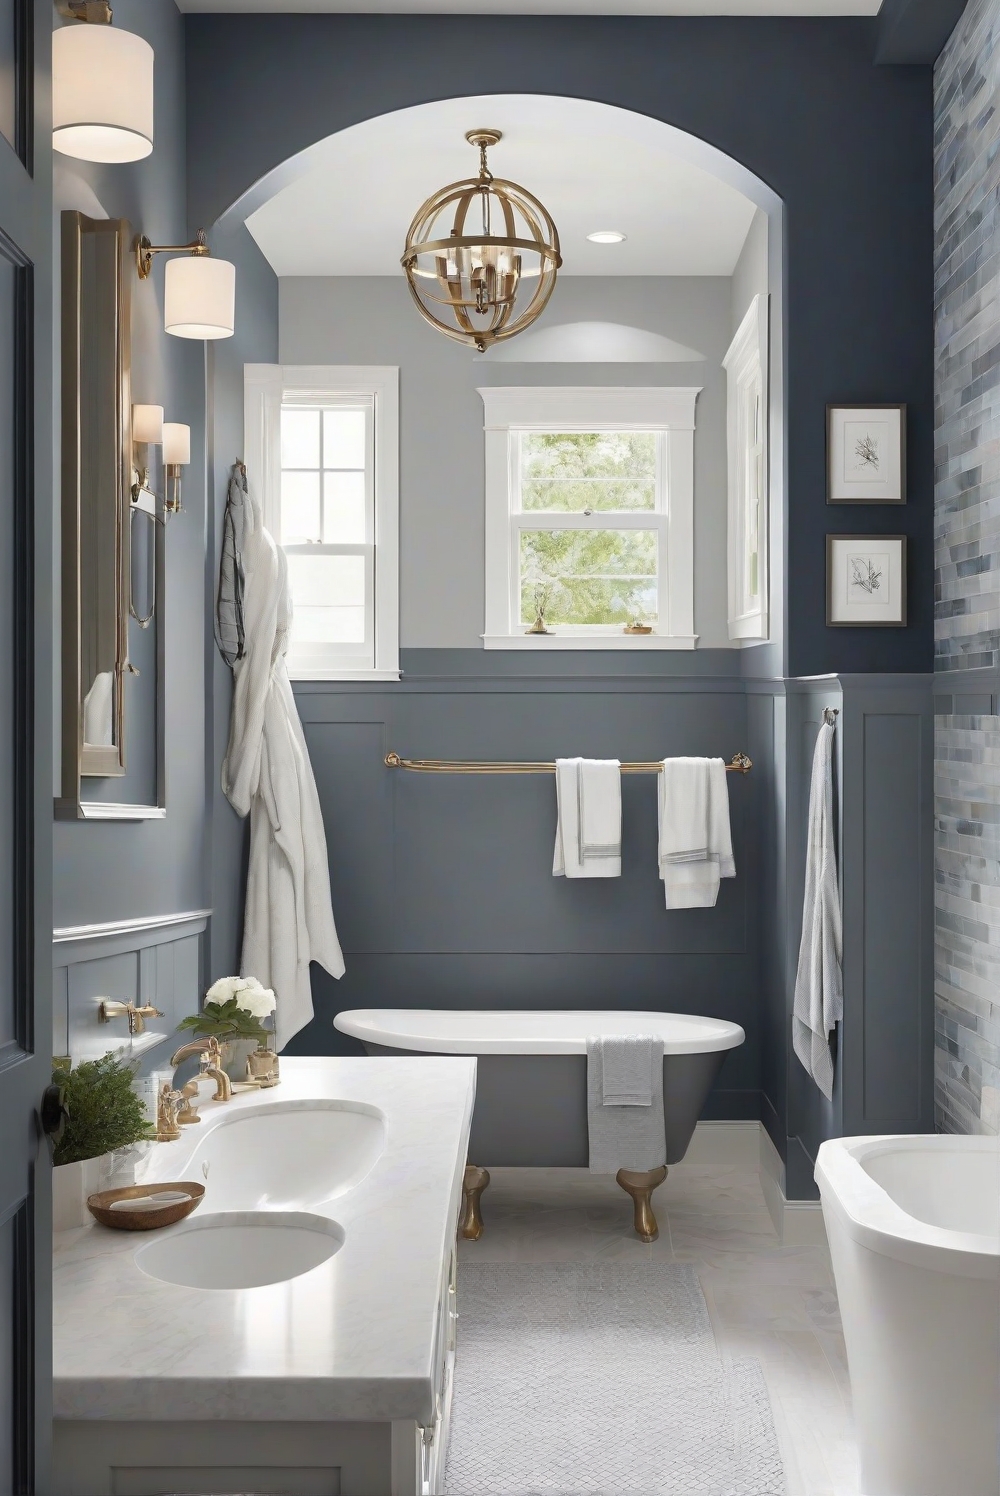 Gentleman's Gray paint, bathroom decor ideas, elegant bathroom design, interior design inspiration, luxury home decor, classic bathroom colors, modern home interior design